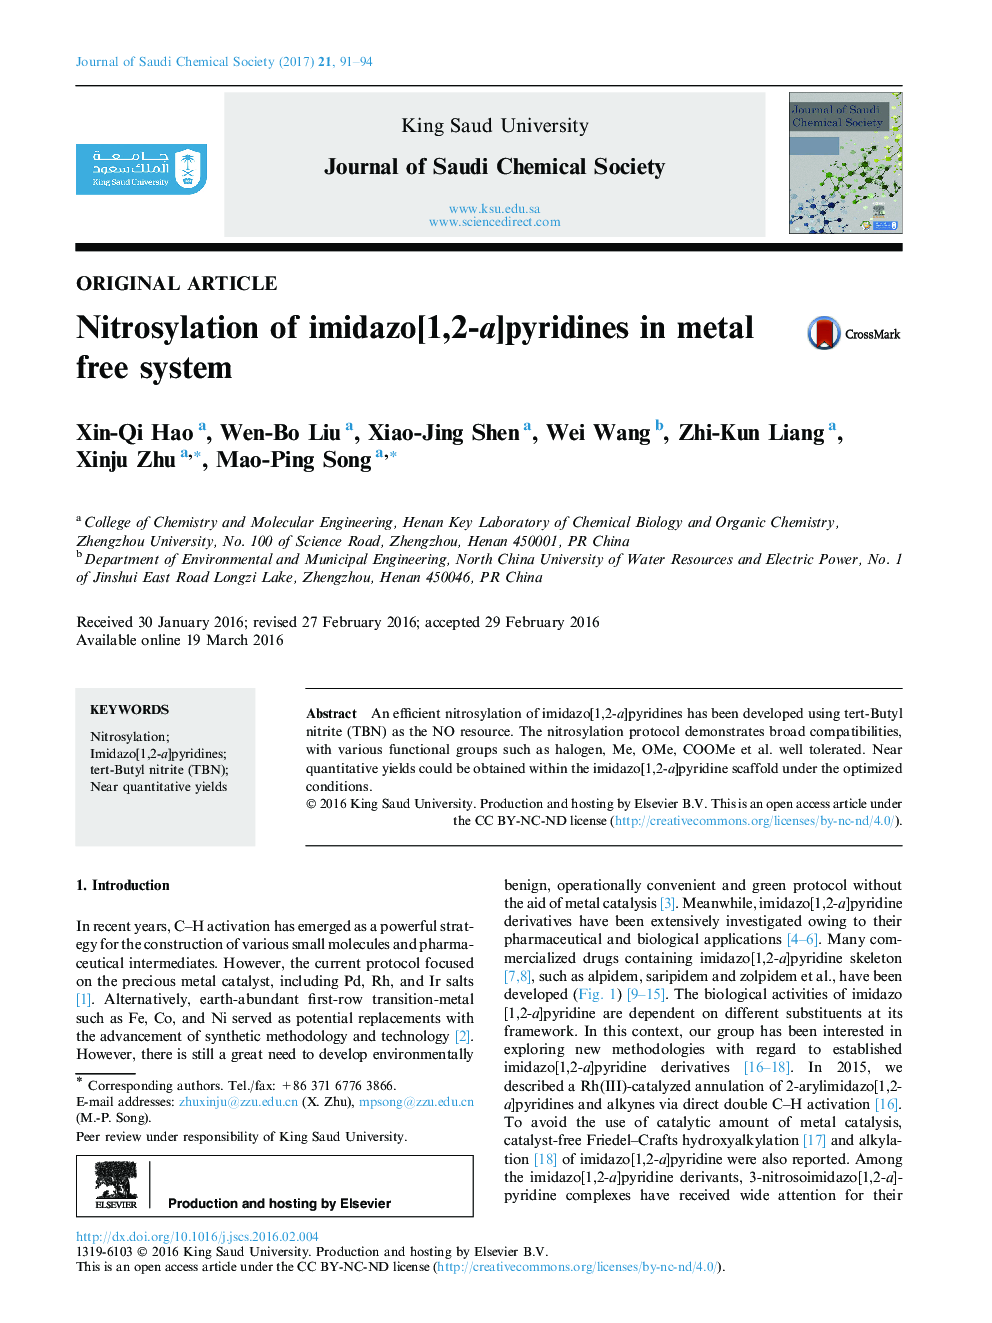 Nitrosylation of imidazo[1,2-a]pyridines in metal free system